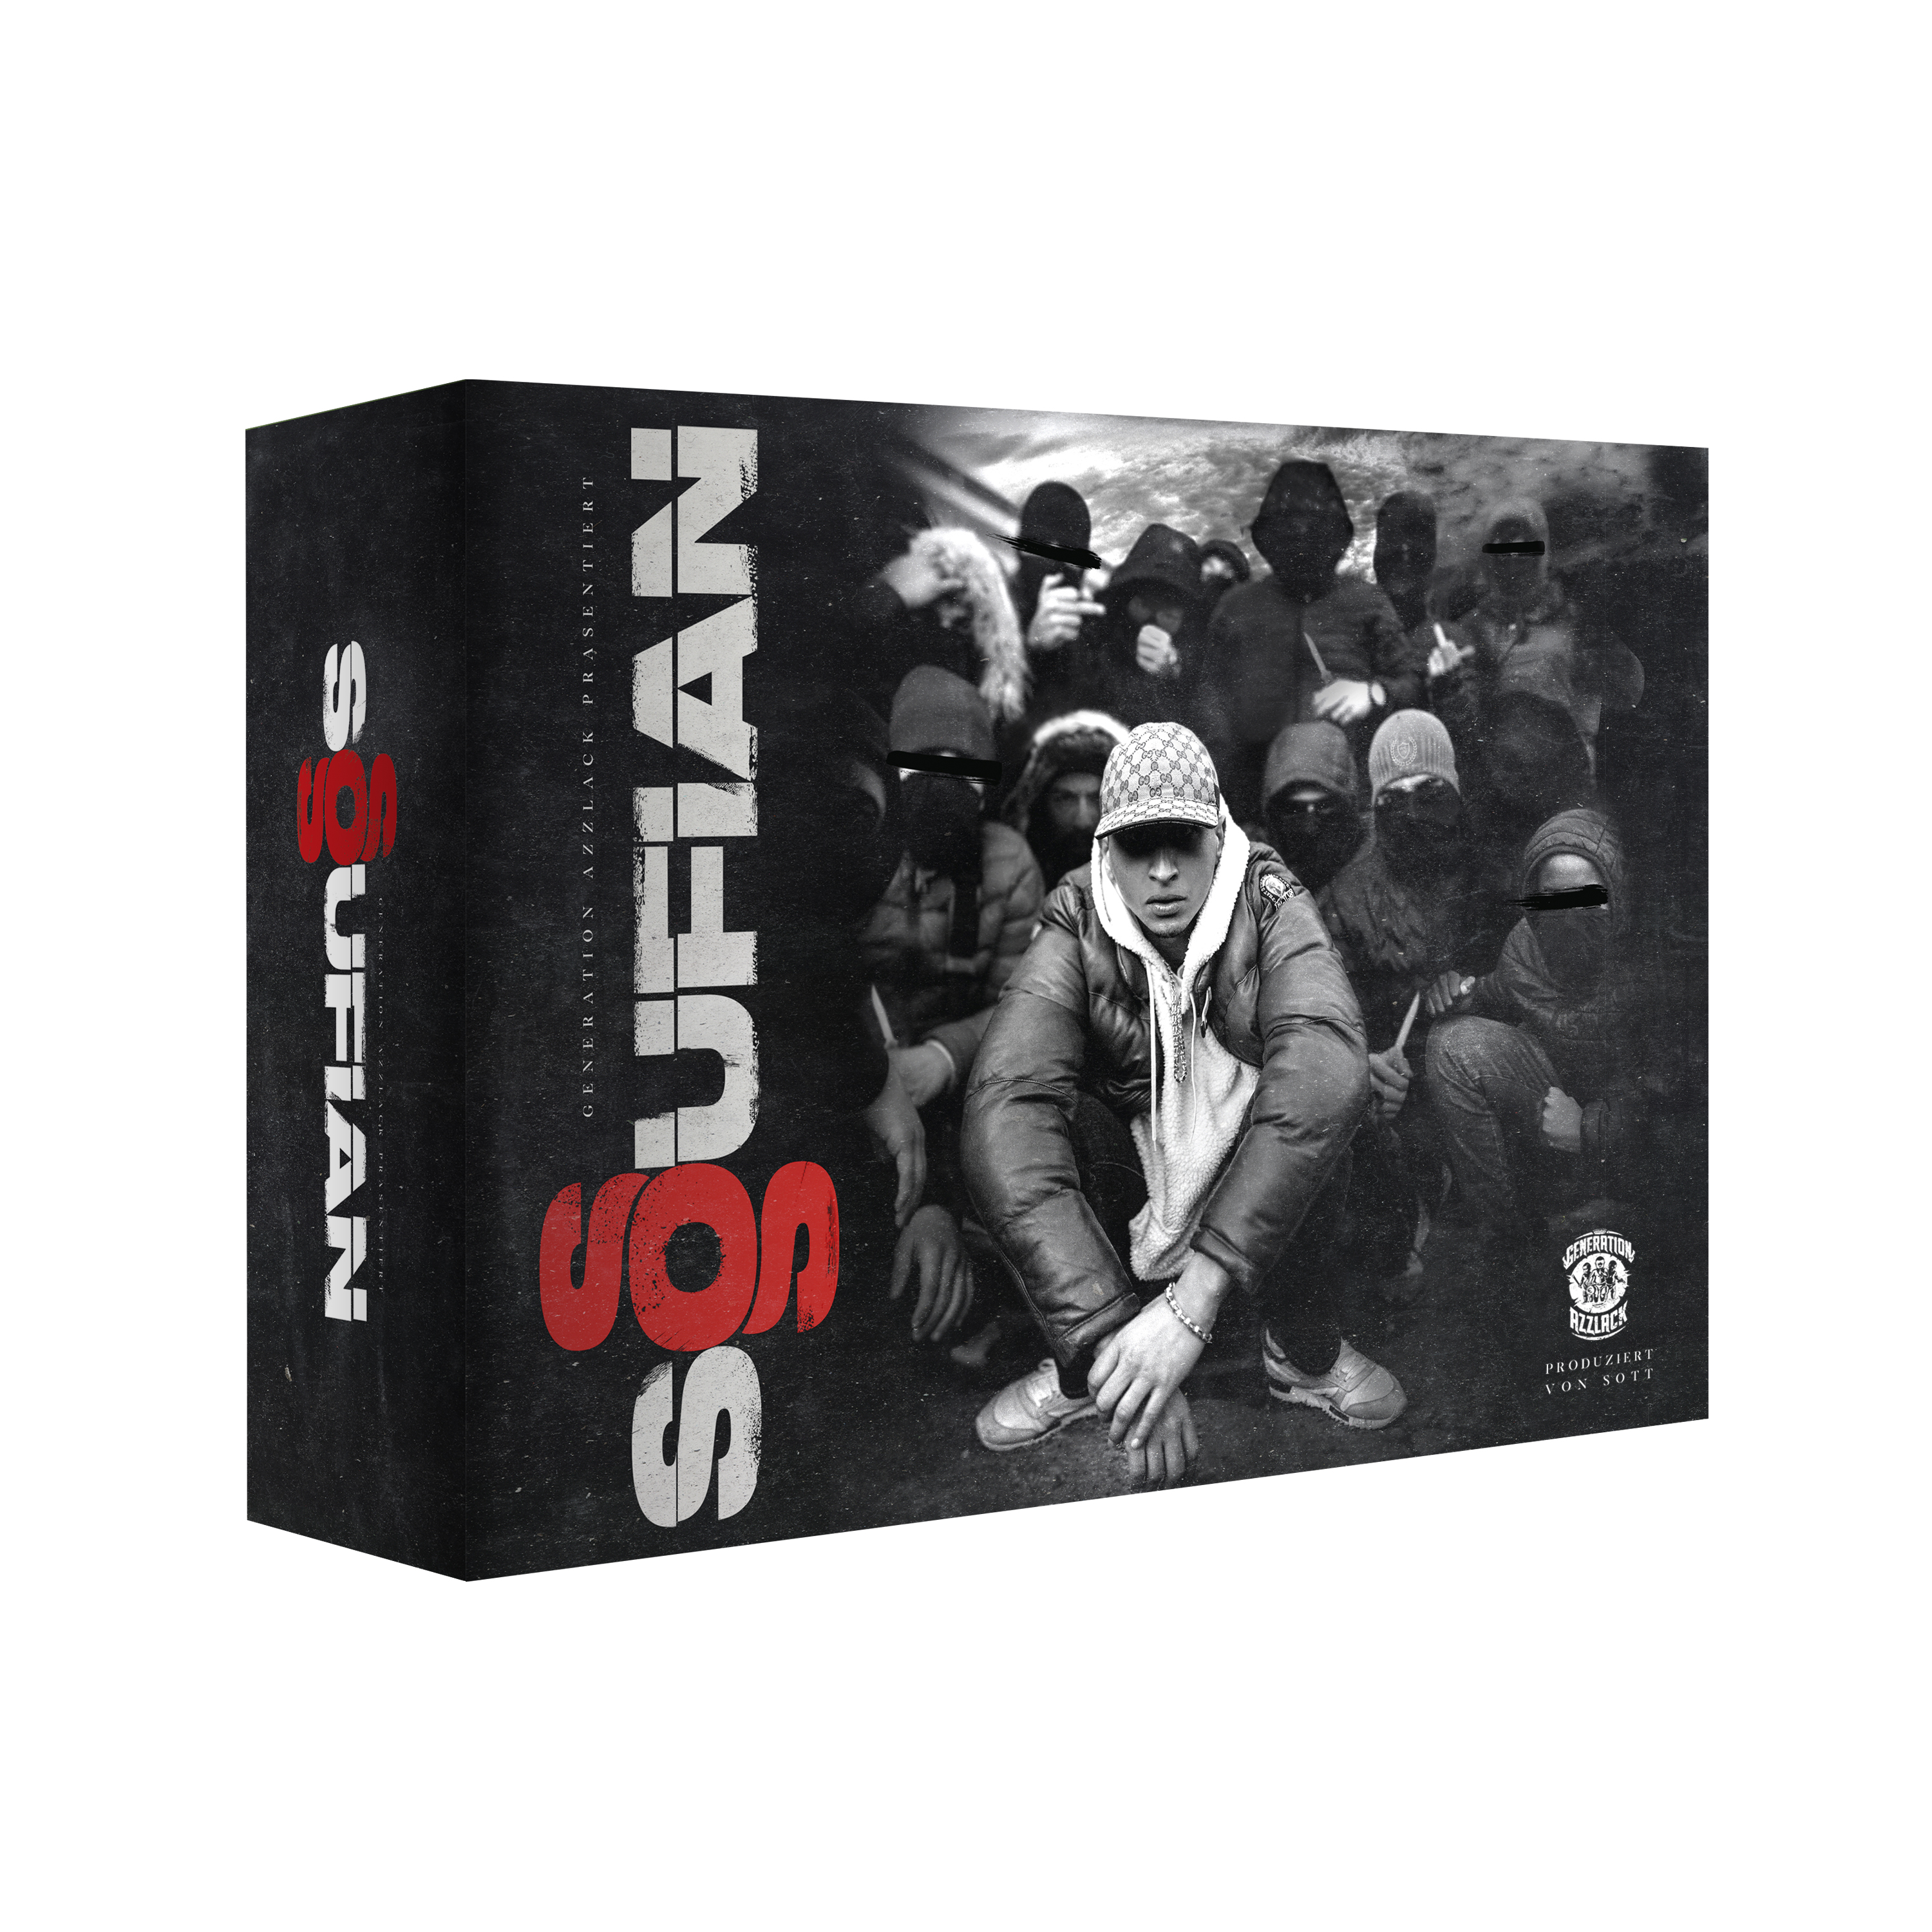 + Merchandising) - Box) (CD S.O.S.(LTD - Soufian